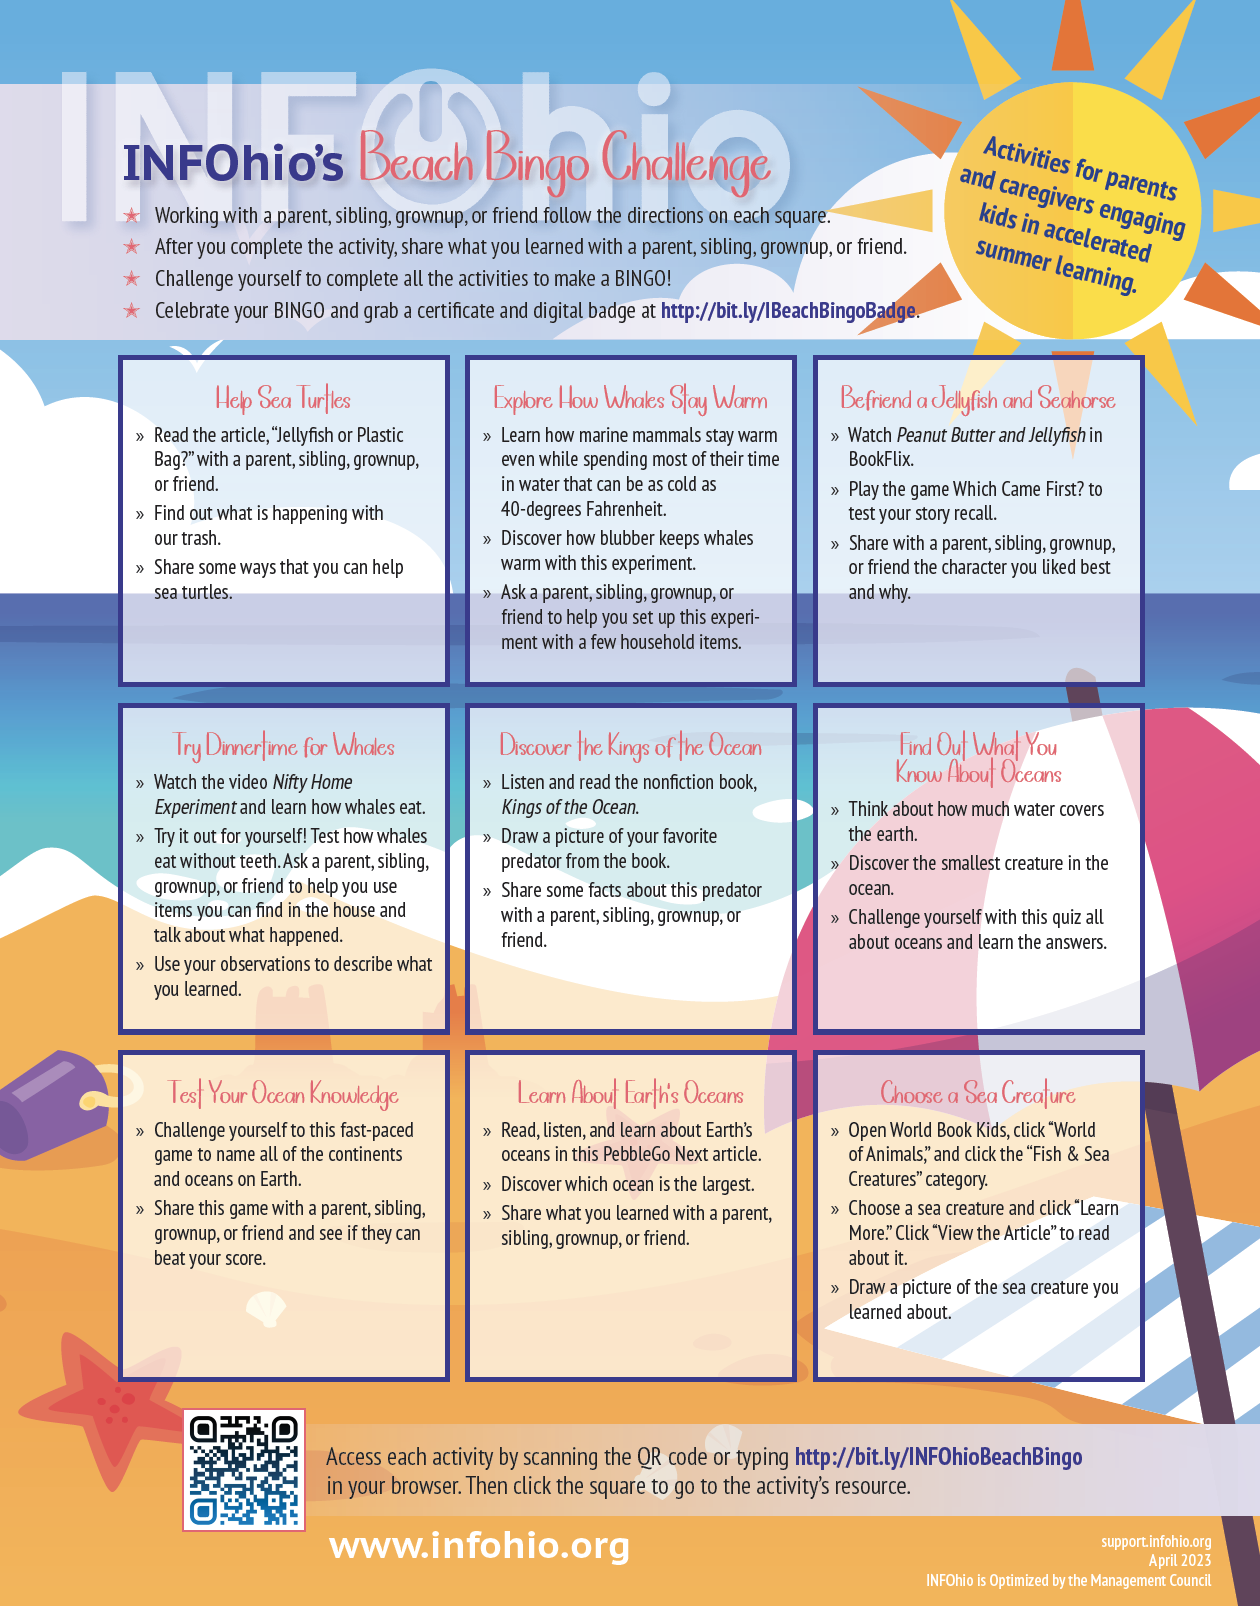 INFOhio Beach Bingo Challenge